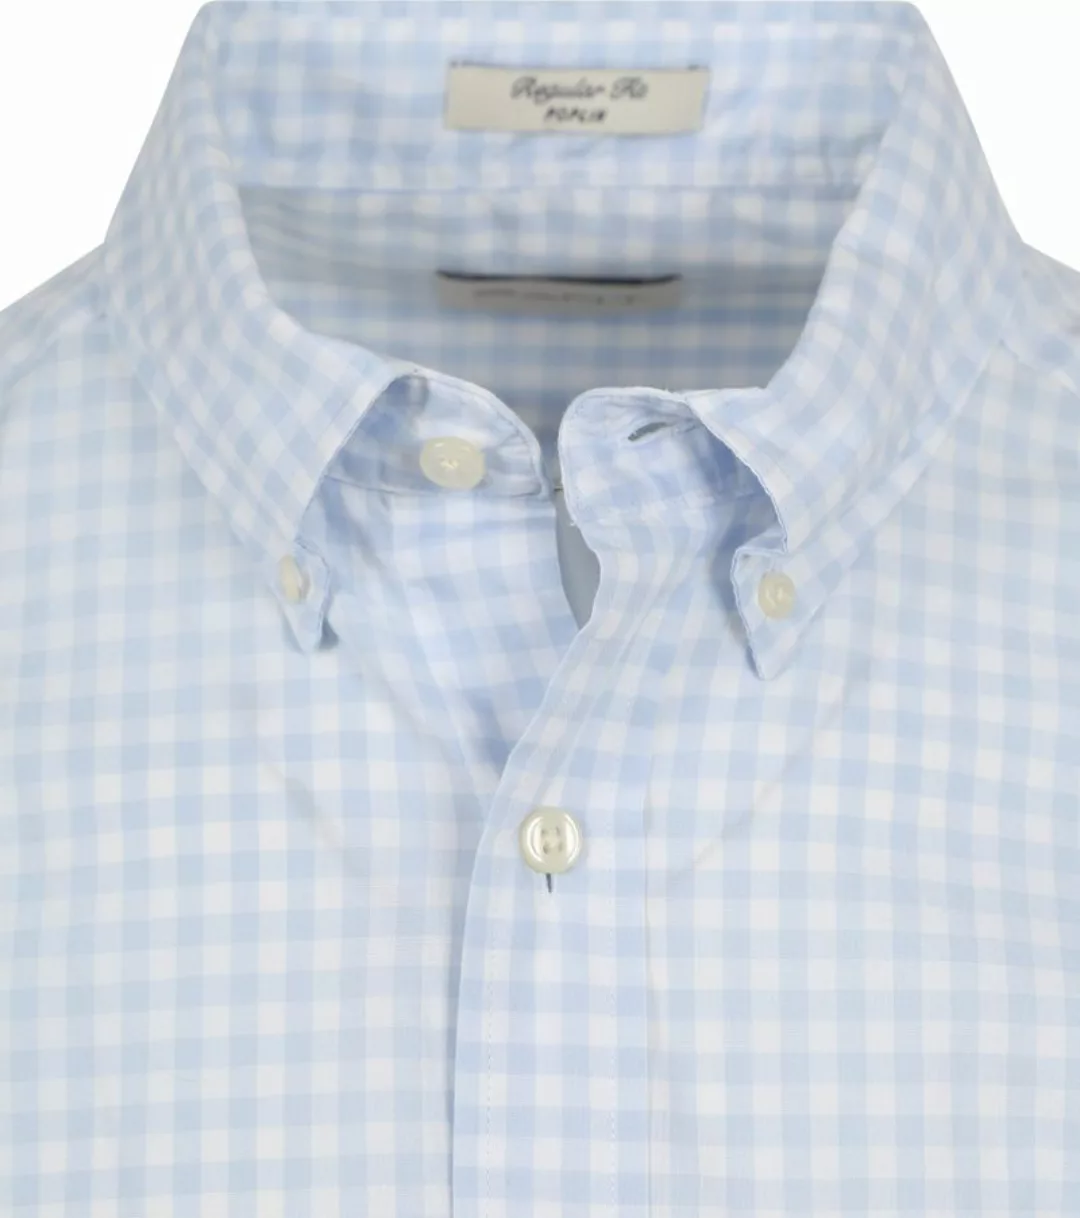 Gant Hemd Short Sleeve Hellblau - Größe 4XL günstig online kaufen